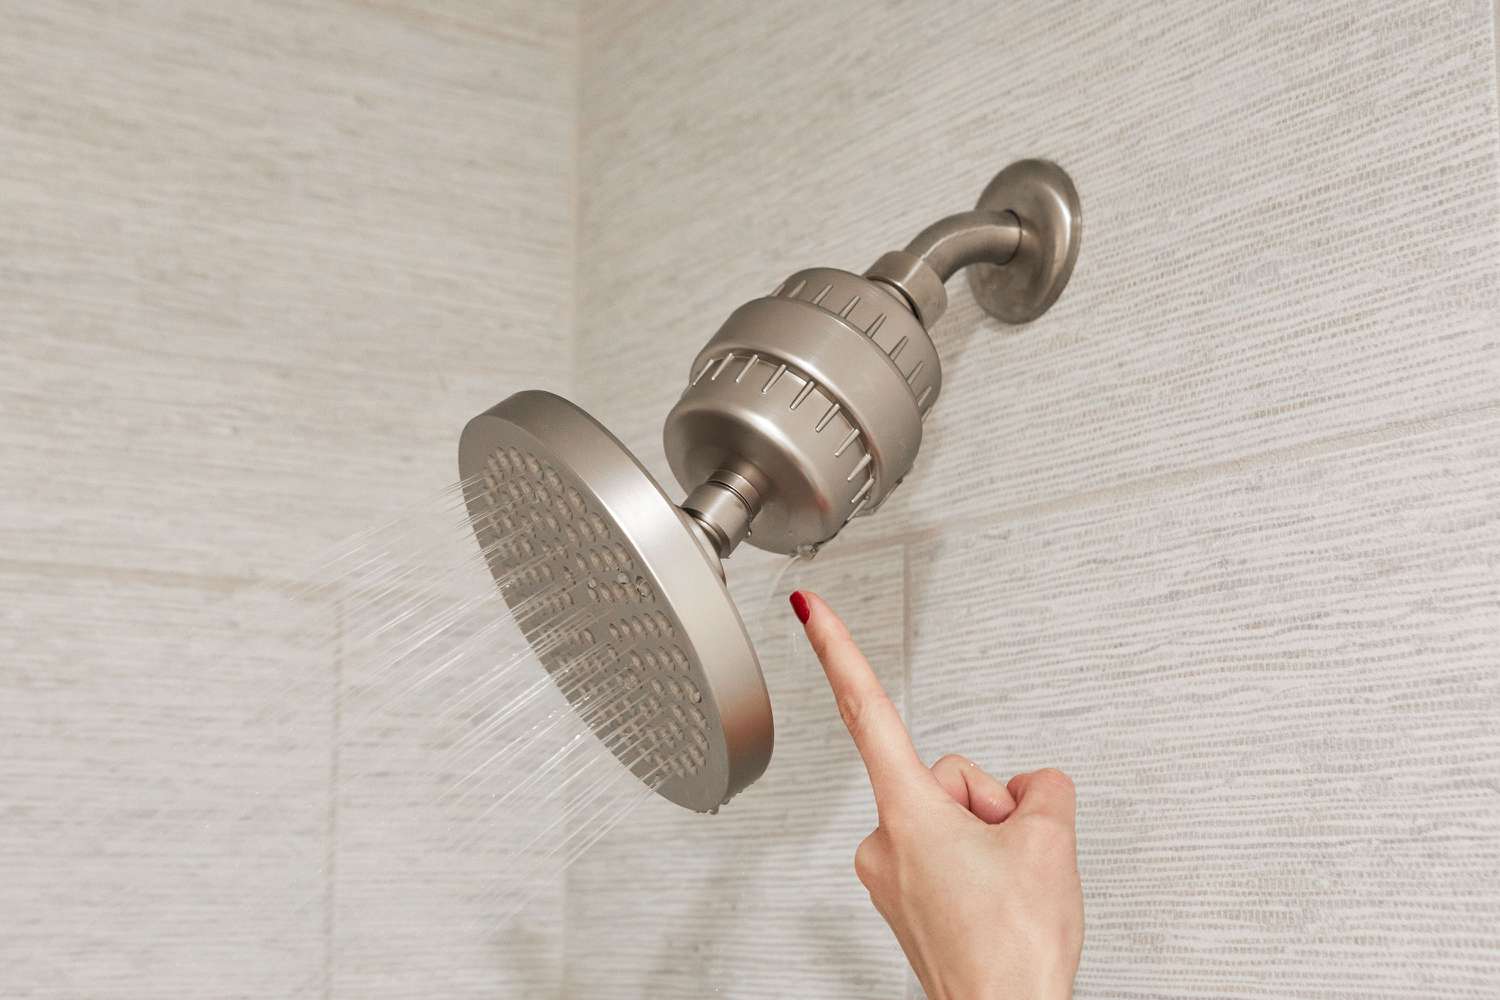 Finger pointing to leak from in-line shower filter on running shower head